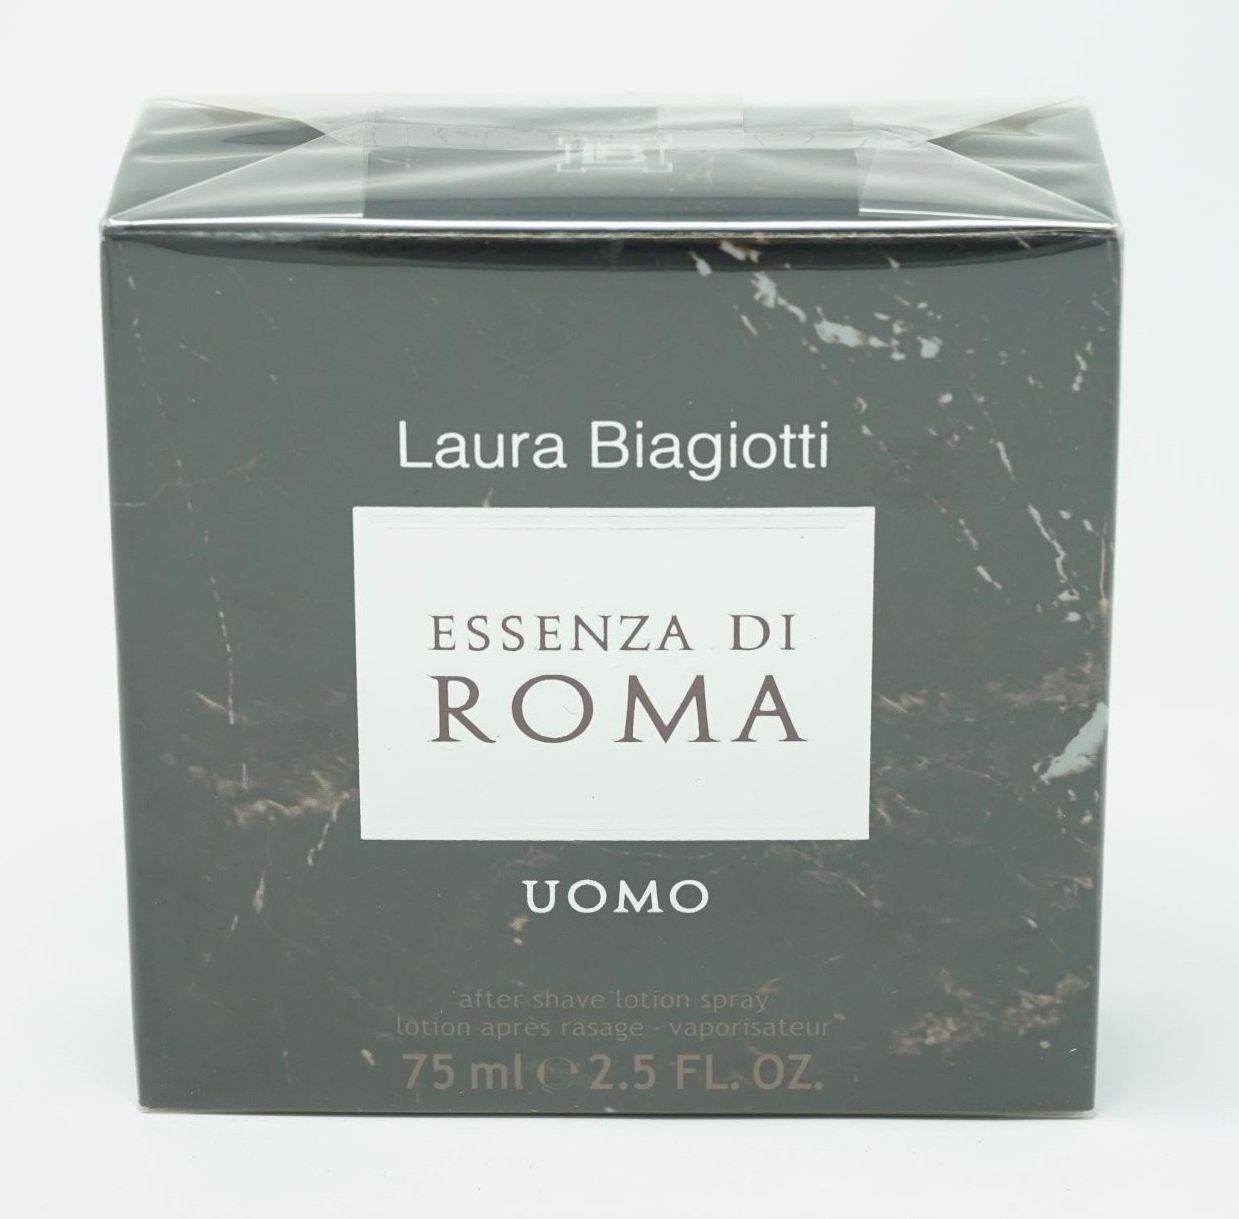 After-Shave 75ml Shave After Roma Biagiotti Uomo di Laura Biagiotti Essenza Laura -